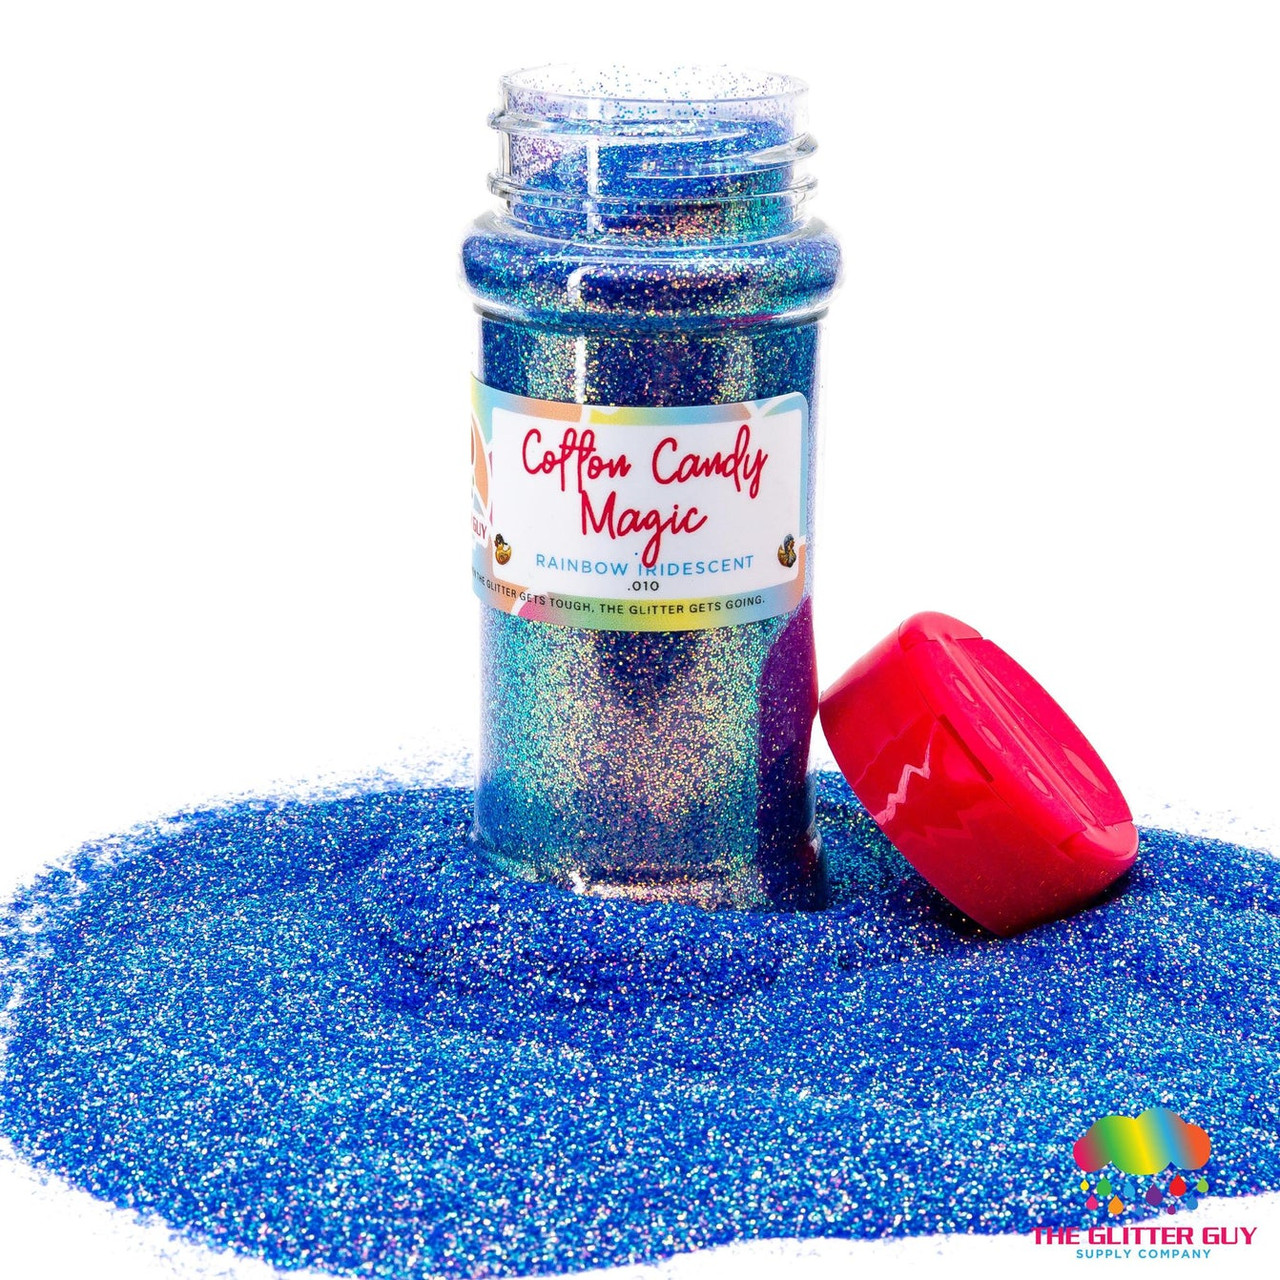 The Glitter Guy | Cotton Candy Magic